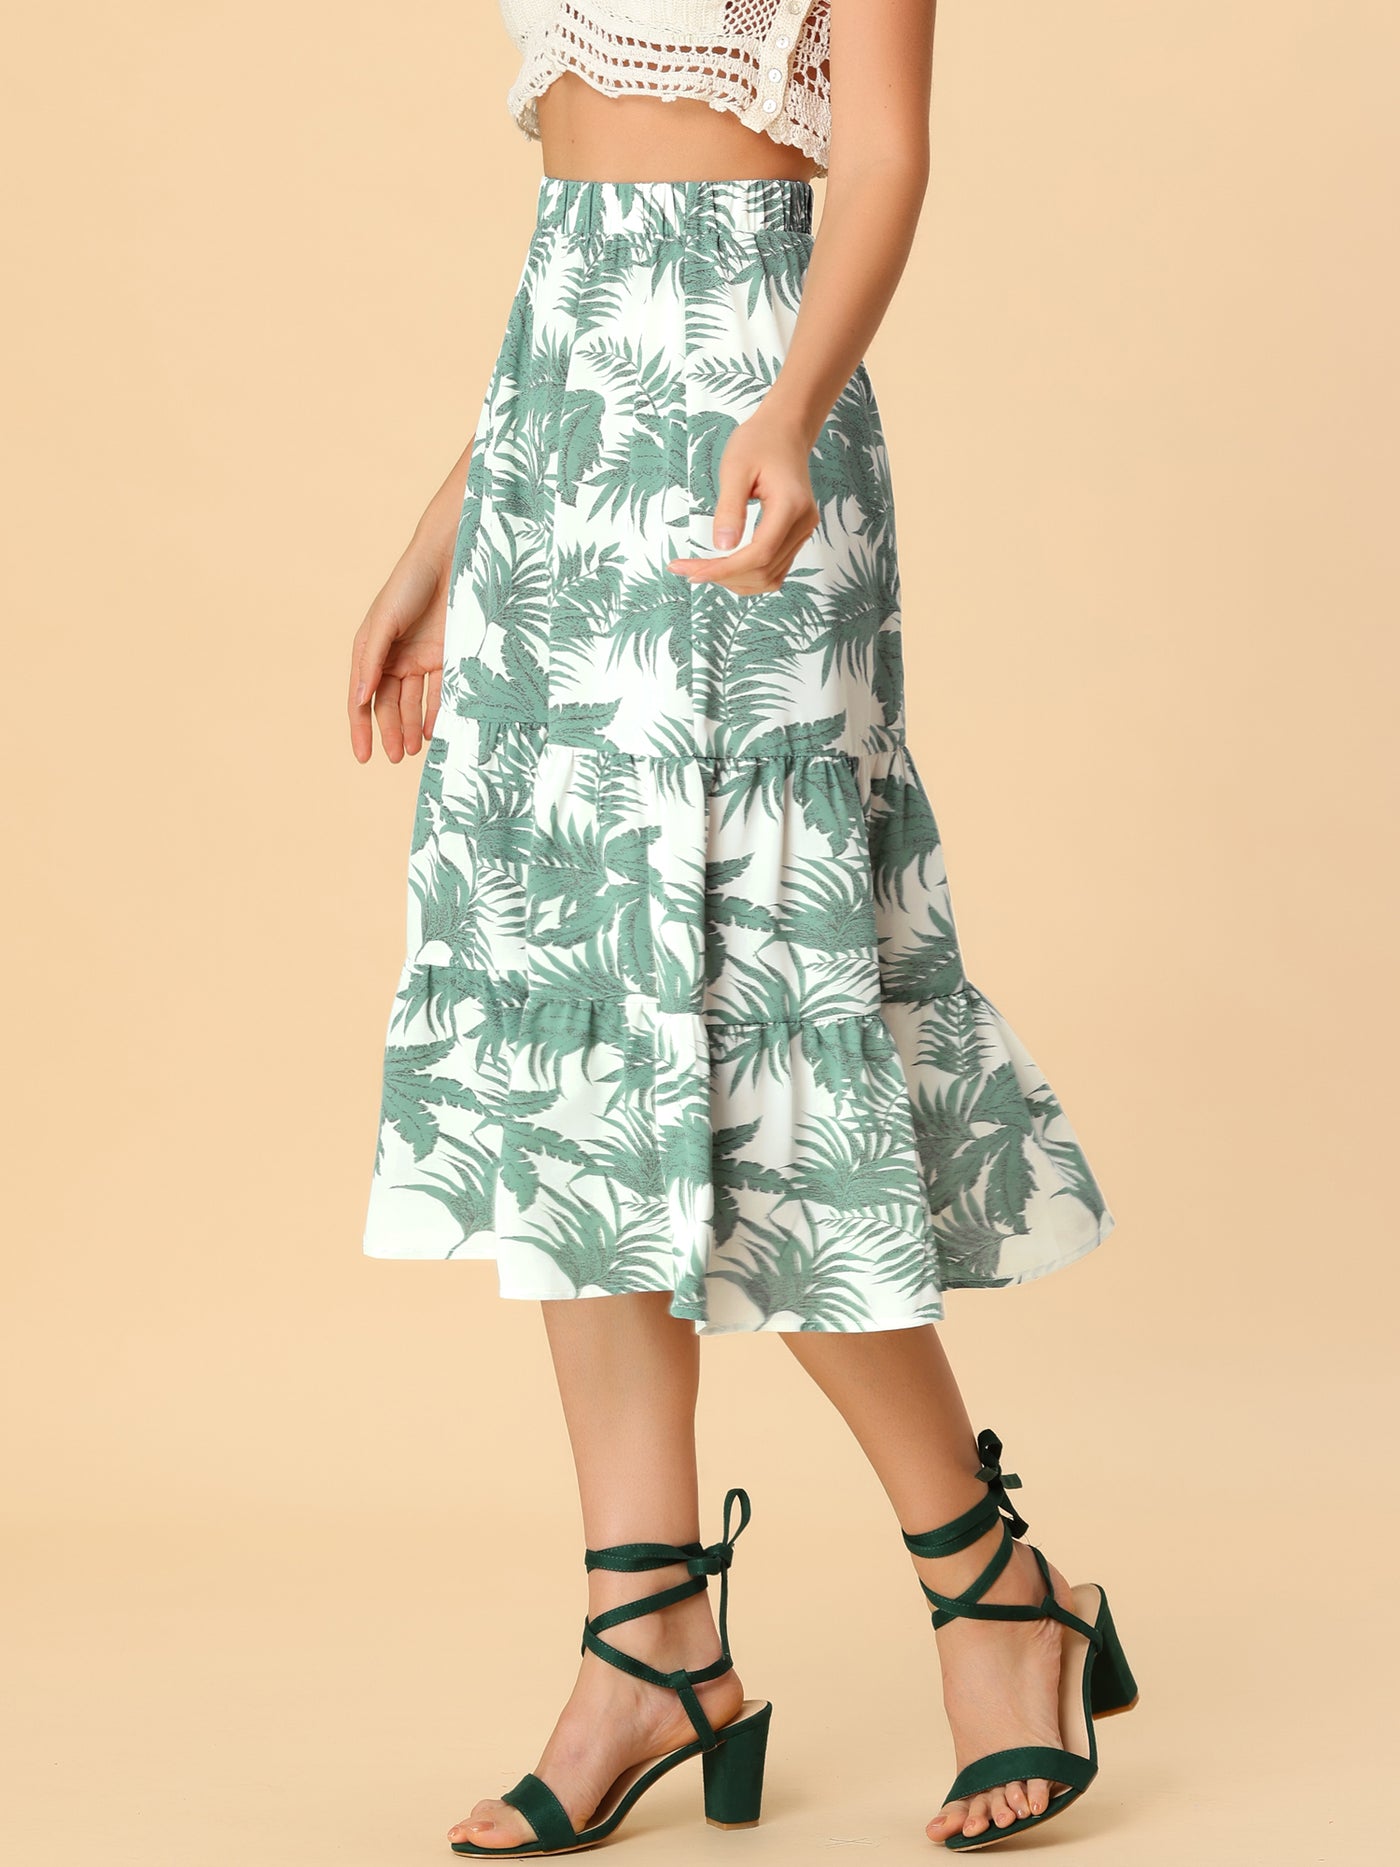 Allegra K Tiered Skirt for Women's Summer Beach Hawaiian Tropical Boho Midi Skirt